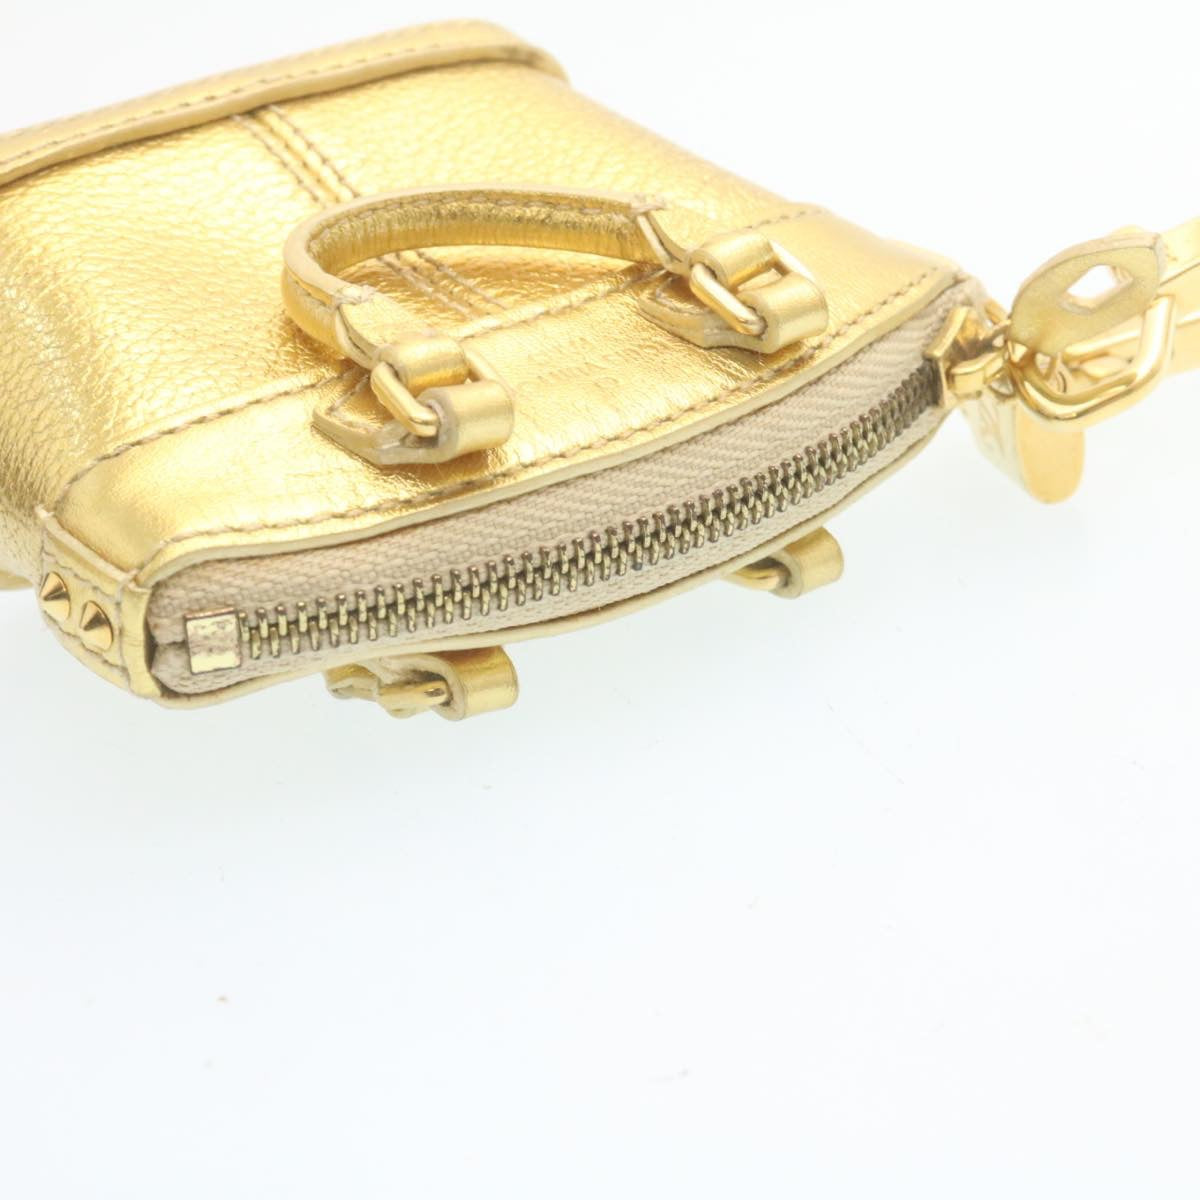 Louis Vuitton Suhali Mini Lockit Gold Color Bag Charm Keychain